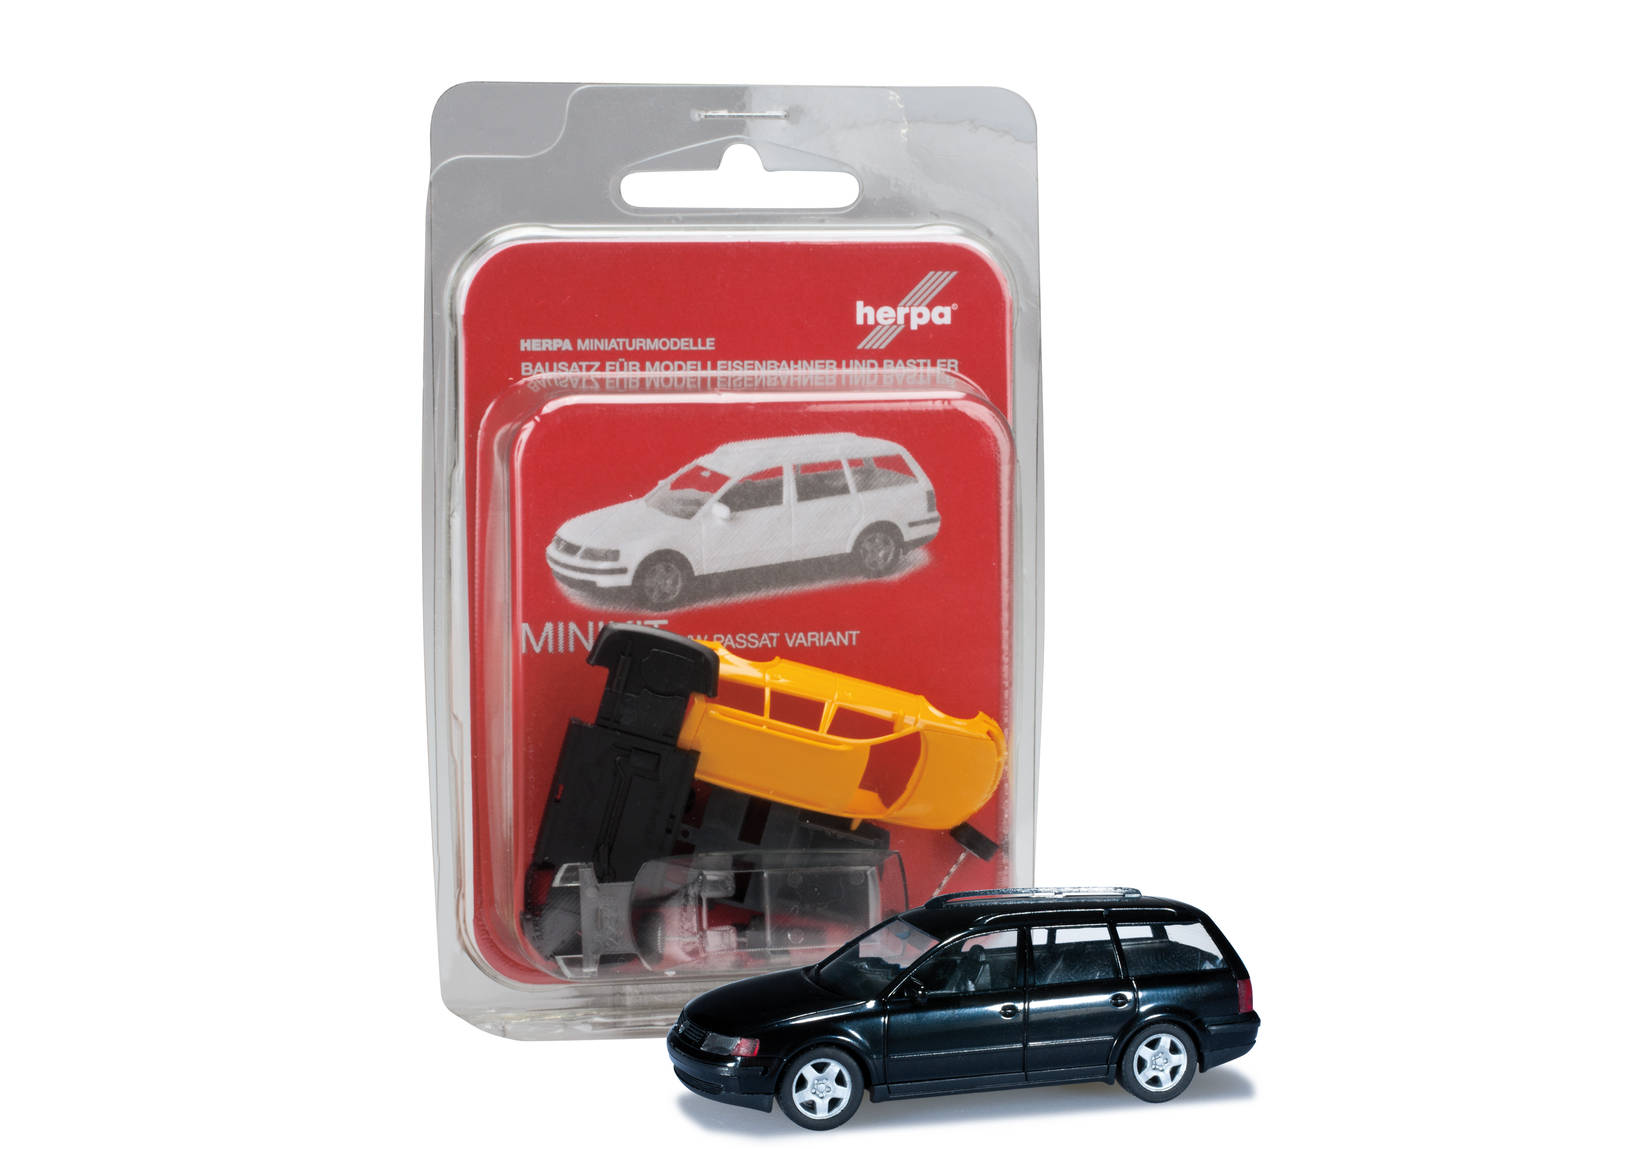 Herpa MiniKit: VW Passat Variant, black